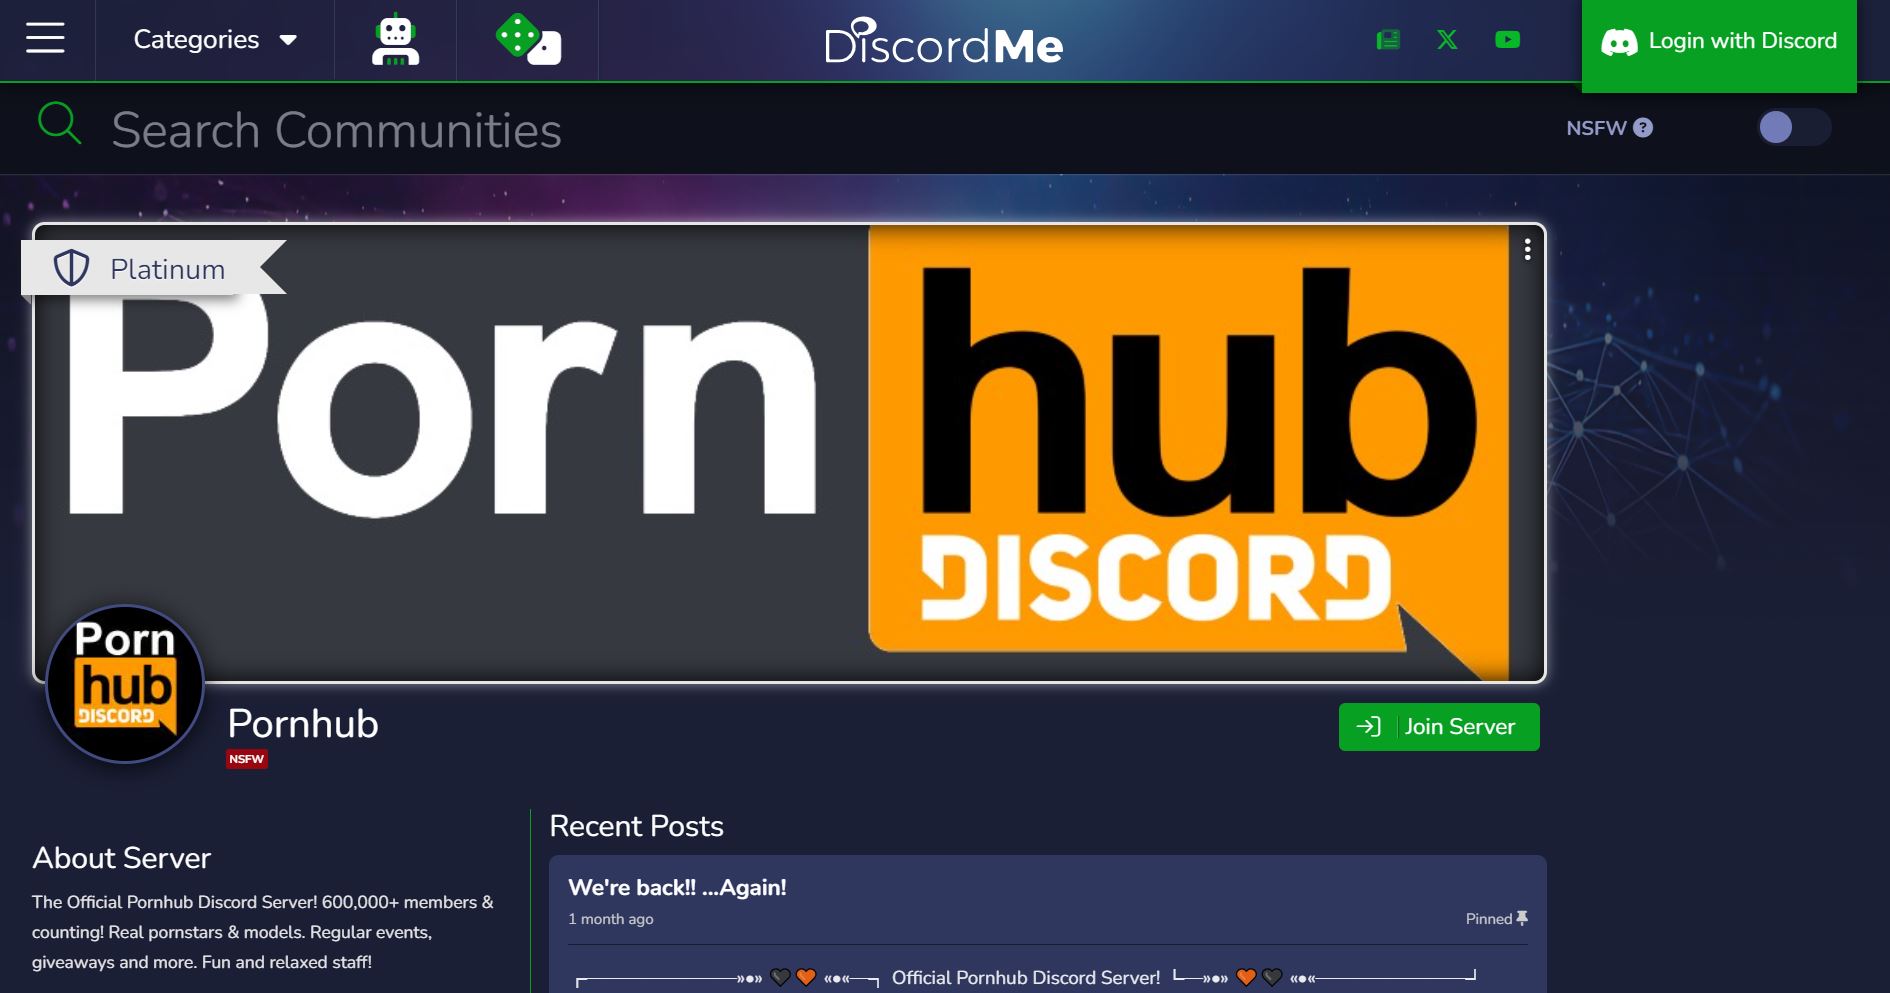 Pornhub Discord